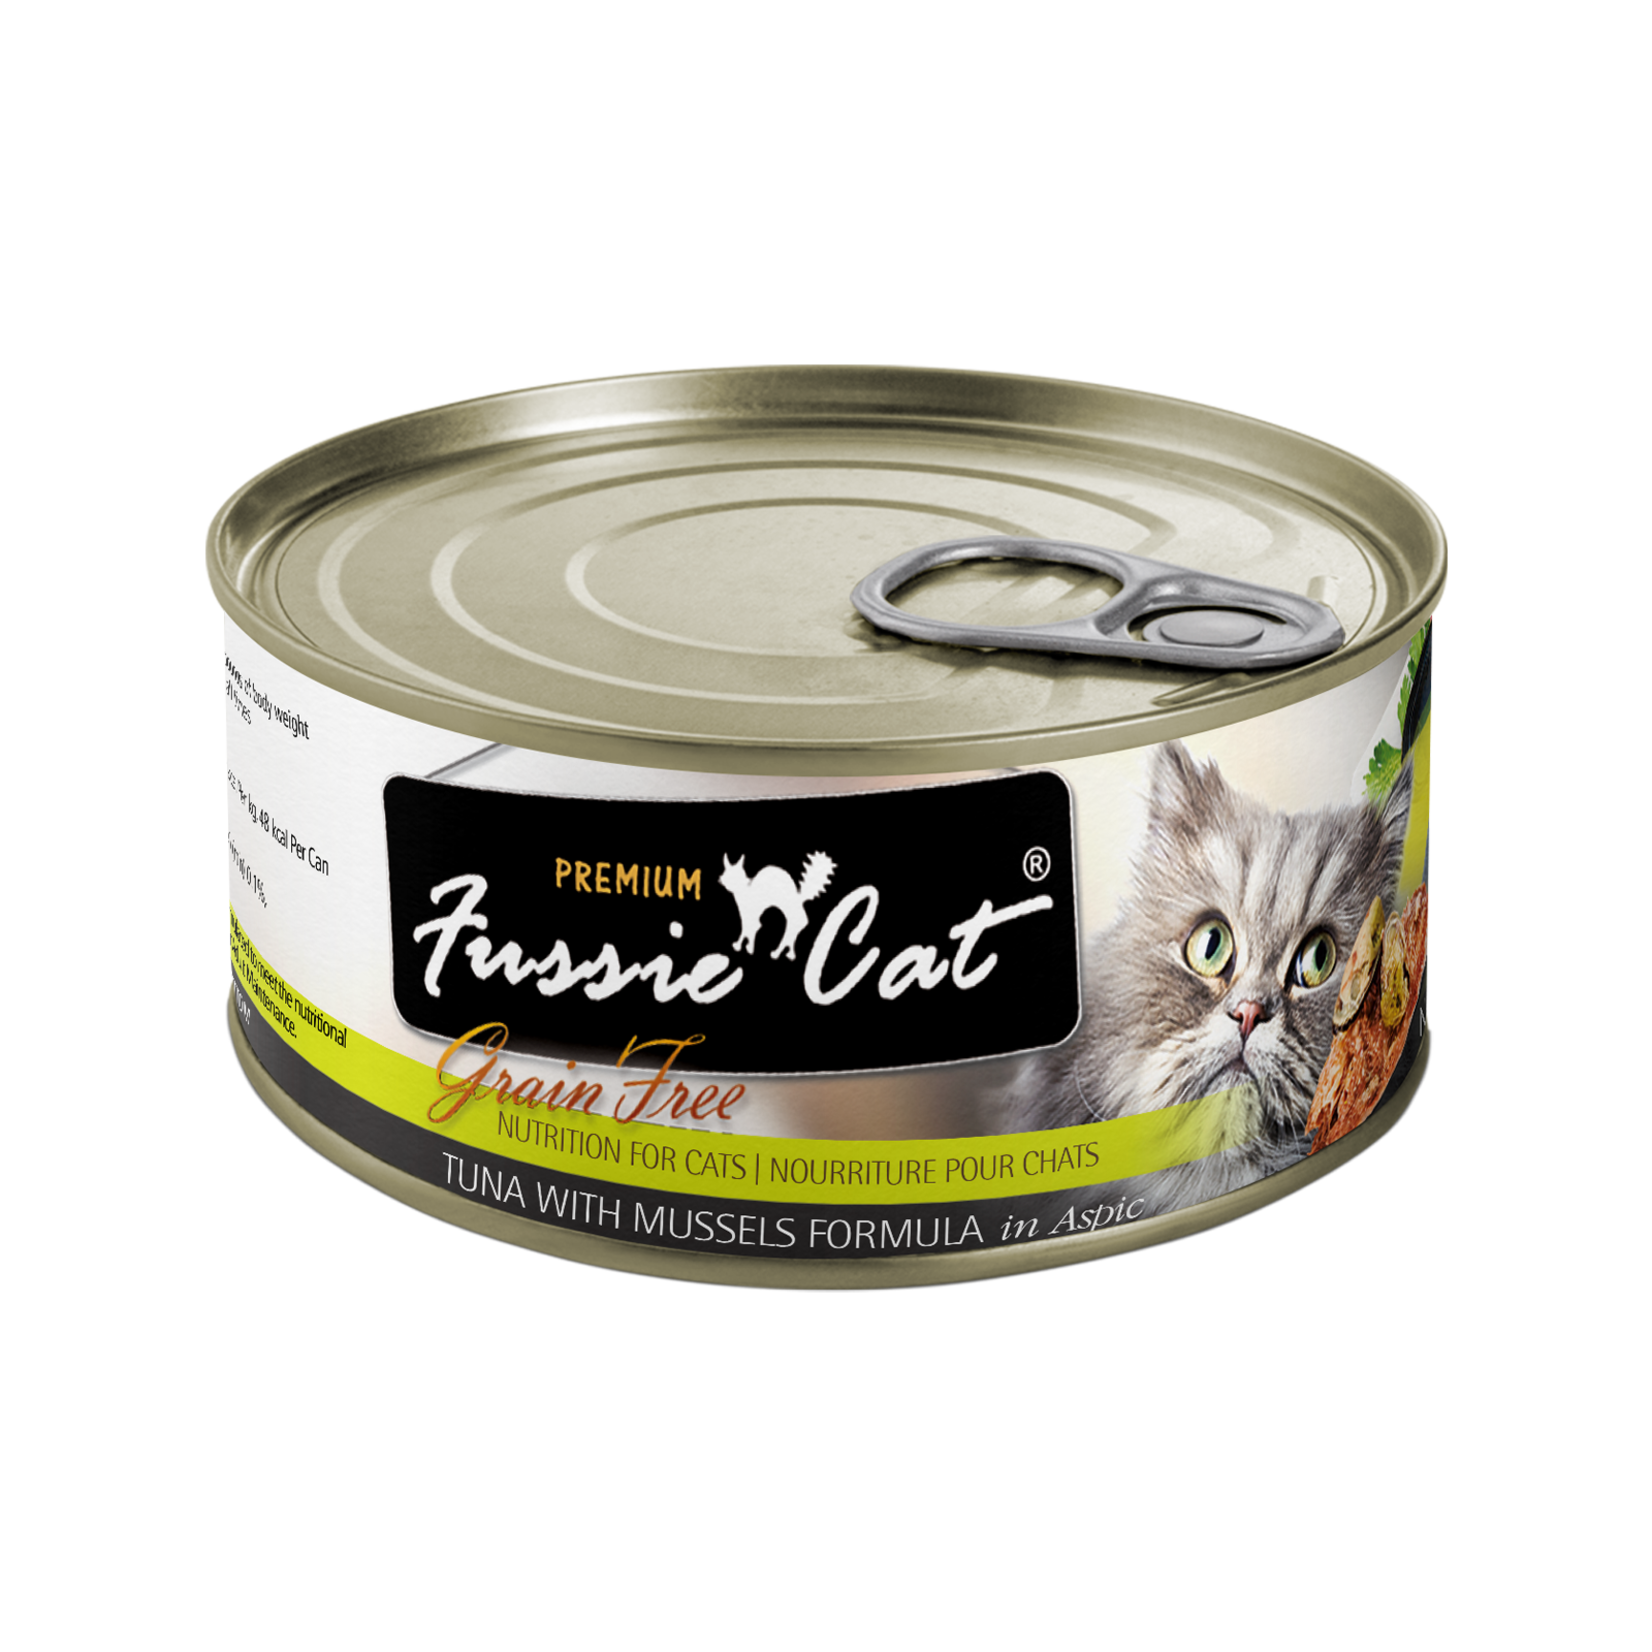 Fussie Cat Fussie Cat Premium - Grain Free Tuna with Mussels Formula in Aspic for Cats